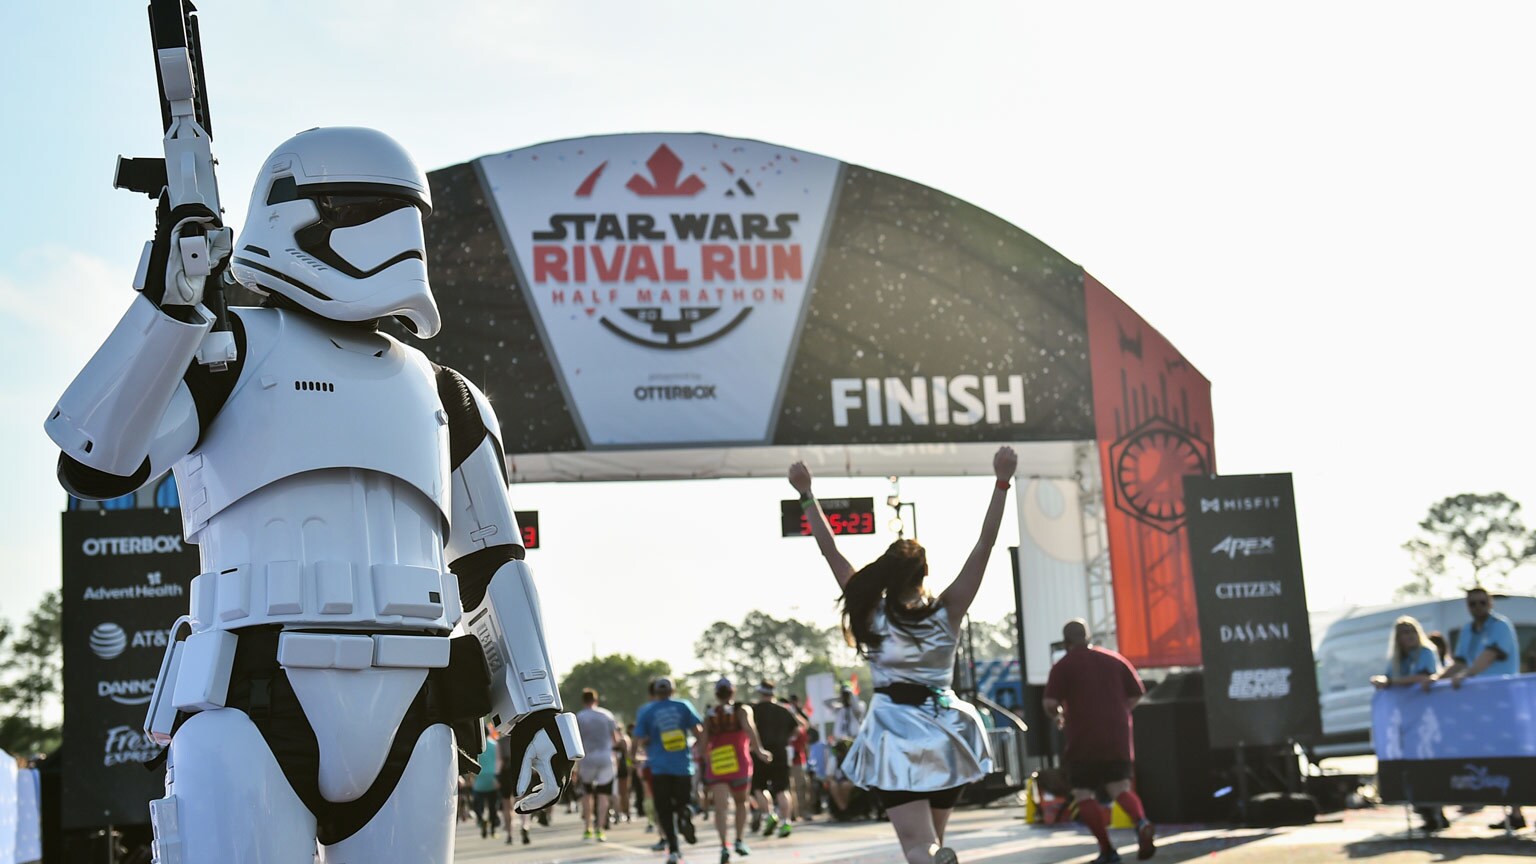 runDisney Star Wars Rival Run Weekend Themes Revealed! - Exclusive